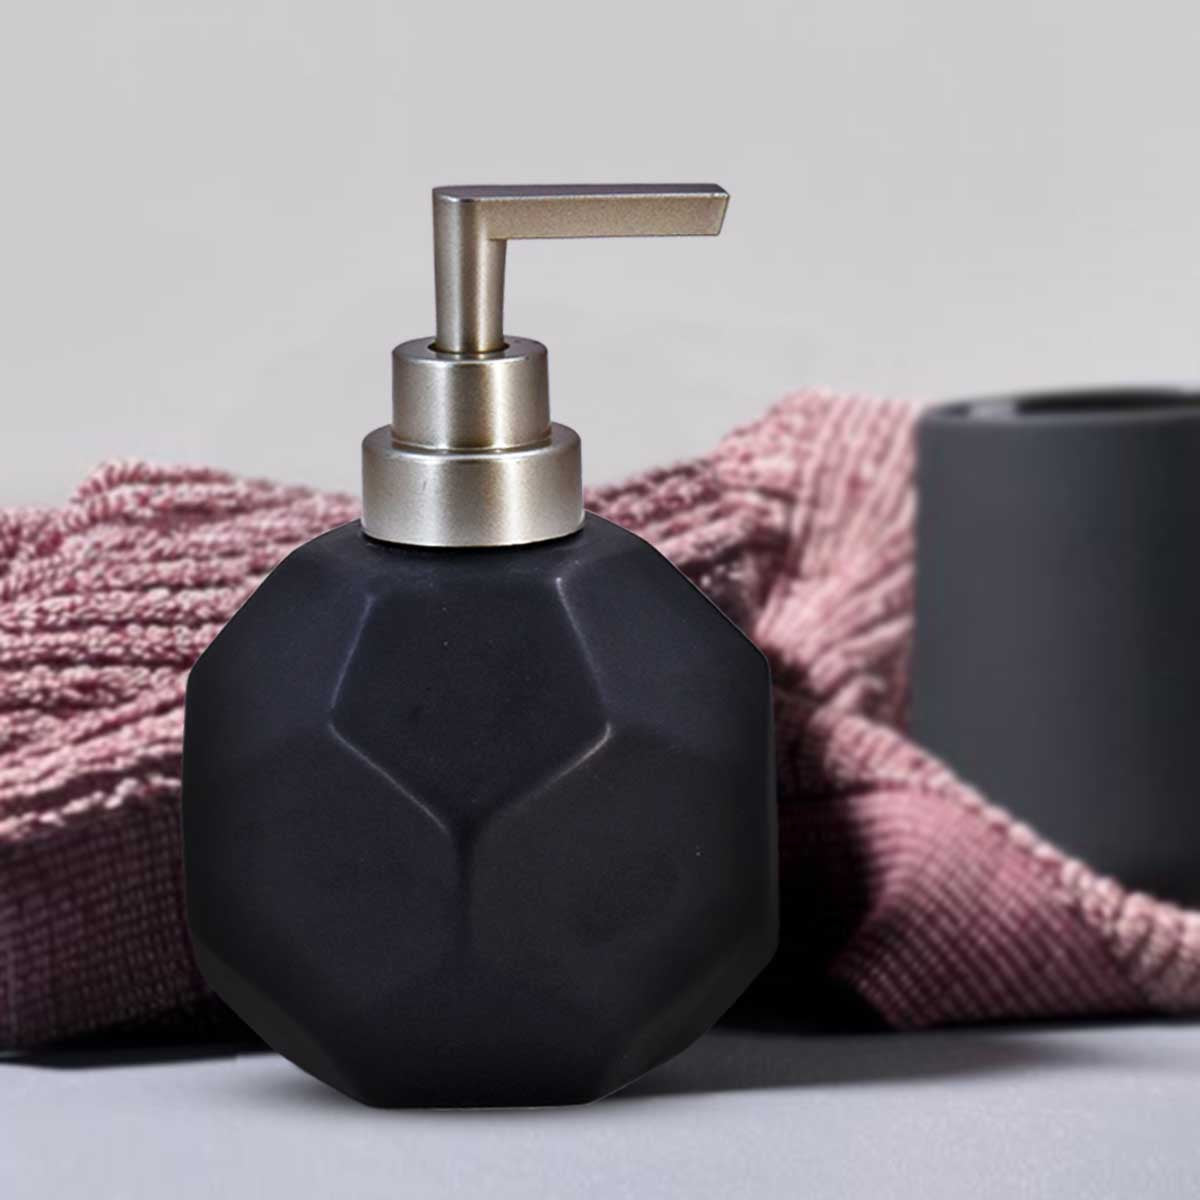 Ceramic Soap Dispenser handwash Pump for Bathroom, Set of 1, Grey (8025)